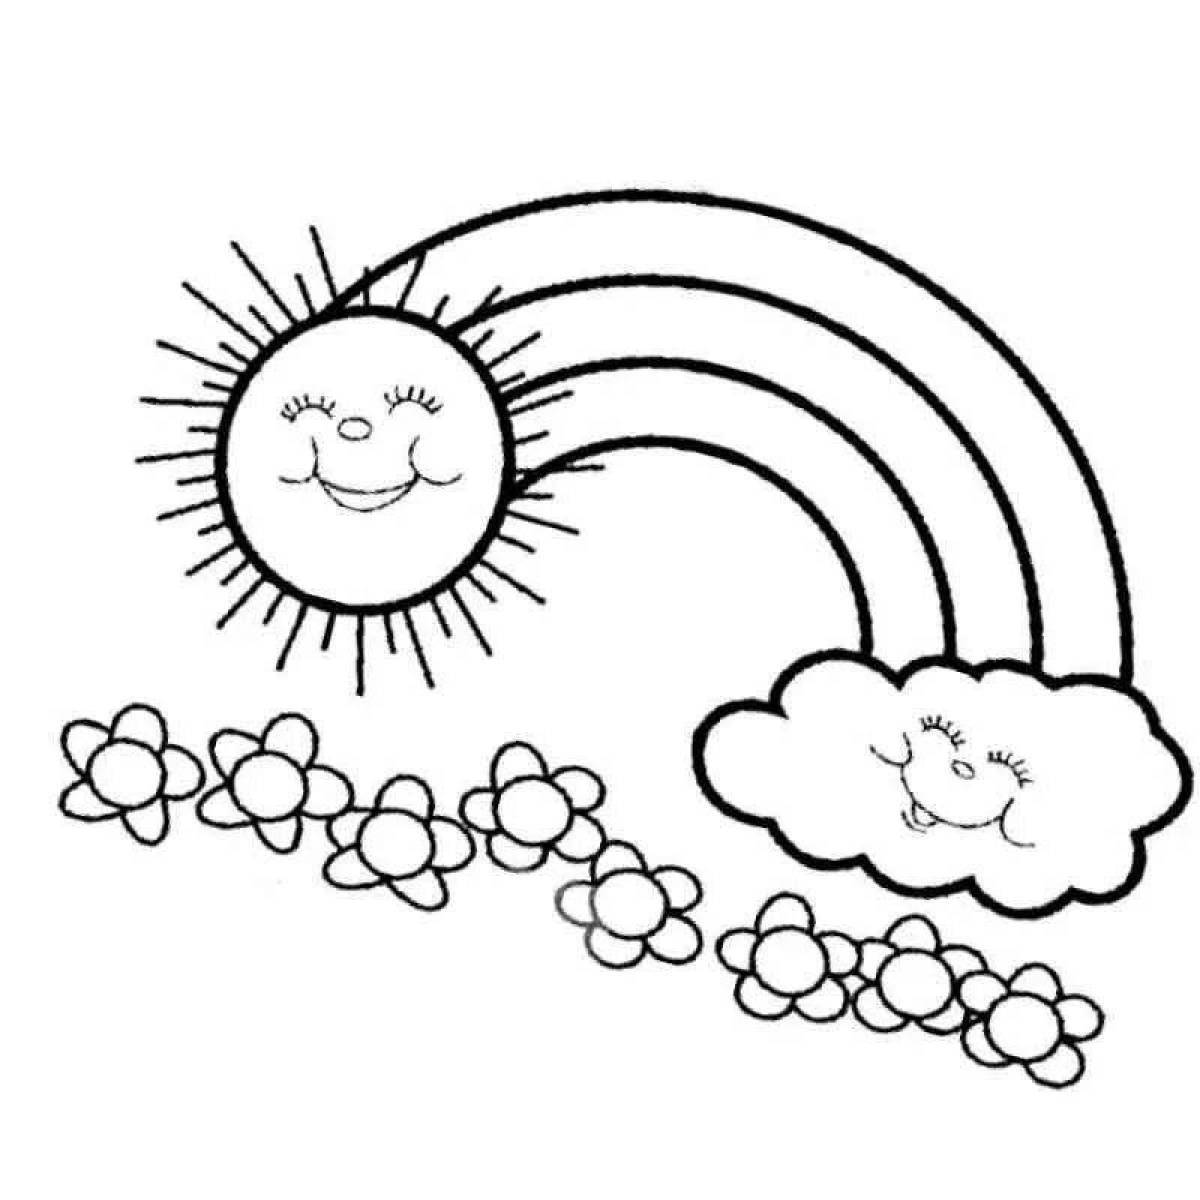 Забавная раскраска солнце для детей 3-4 лет